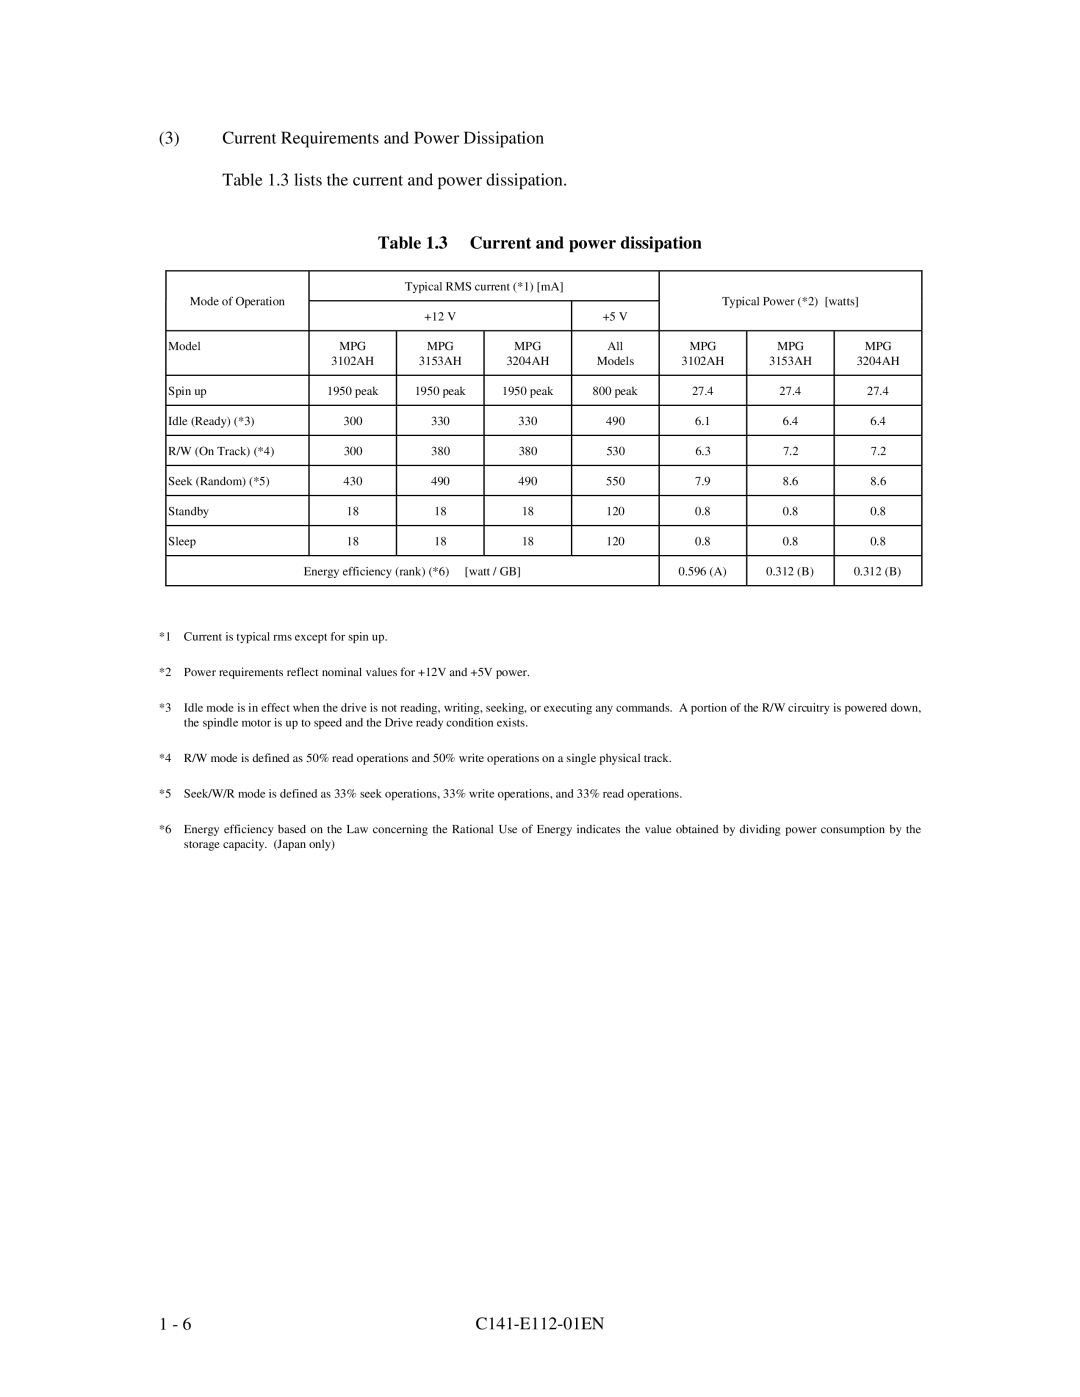 Fujitsu MPG3XXXAH manual 3 Current and power dissipation, C141-E112-01EN 